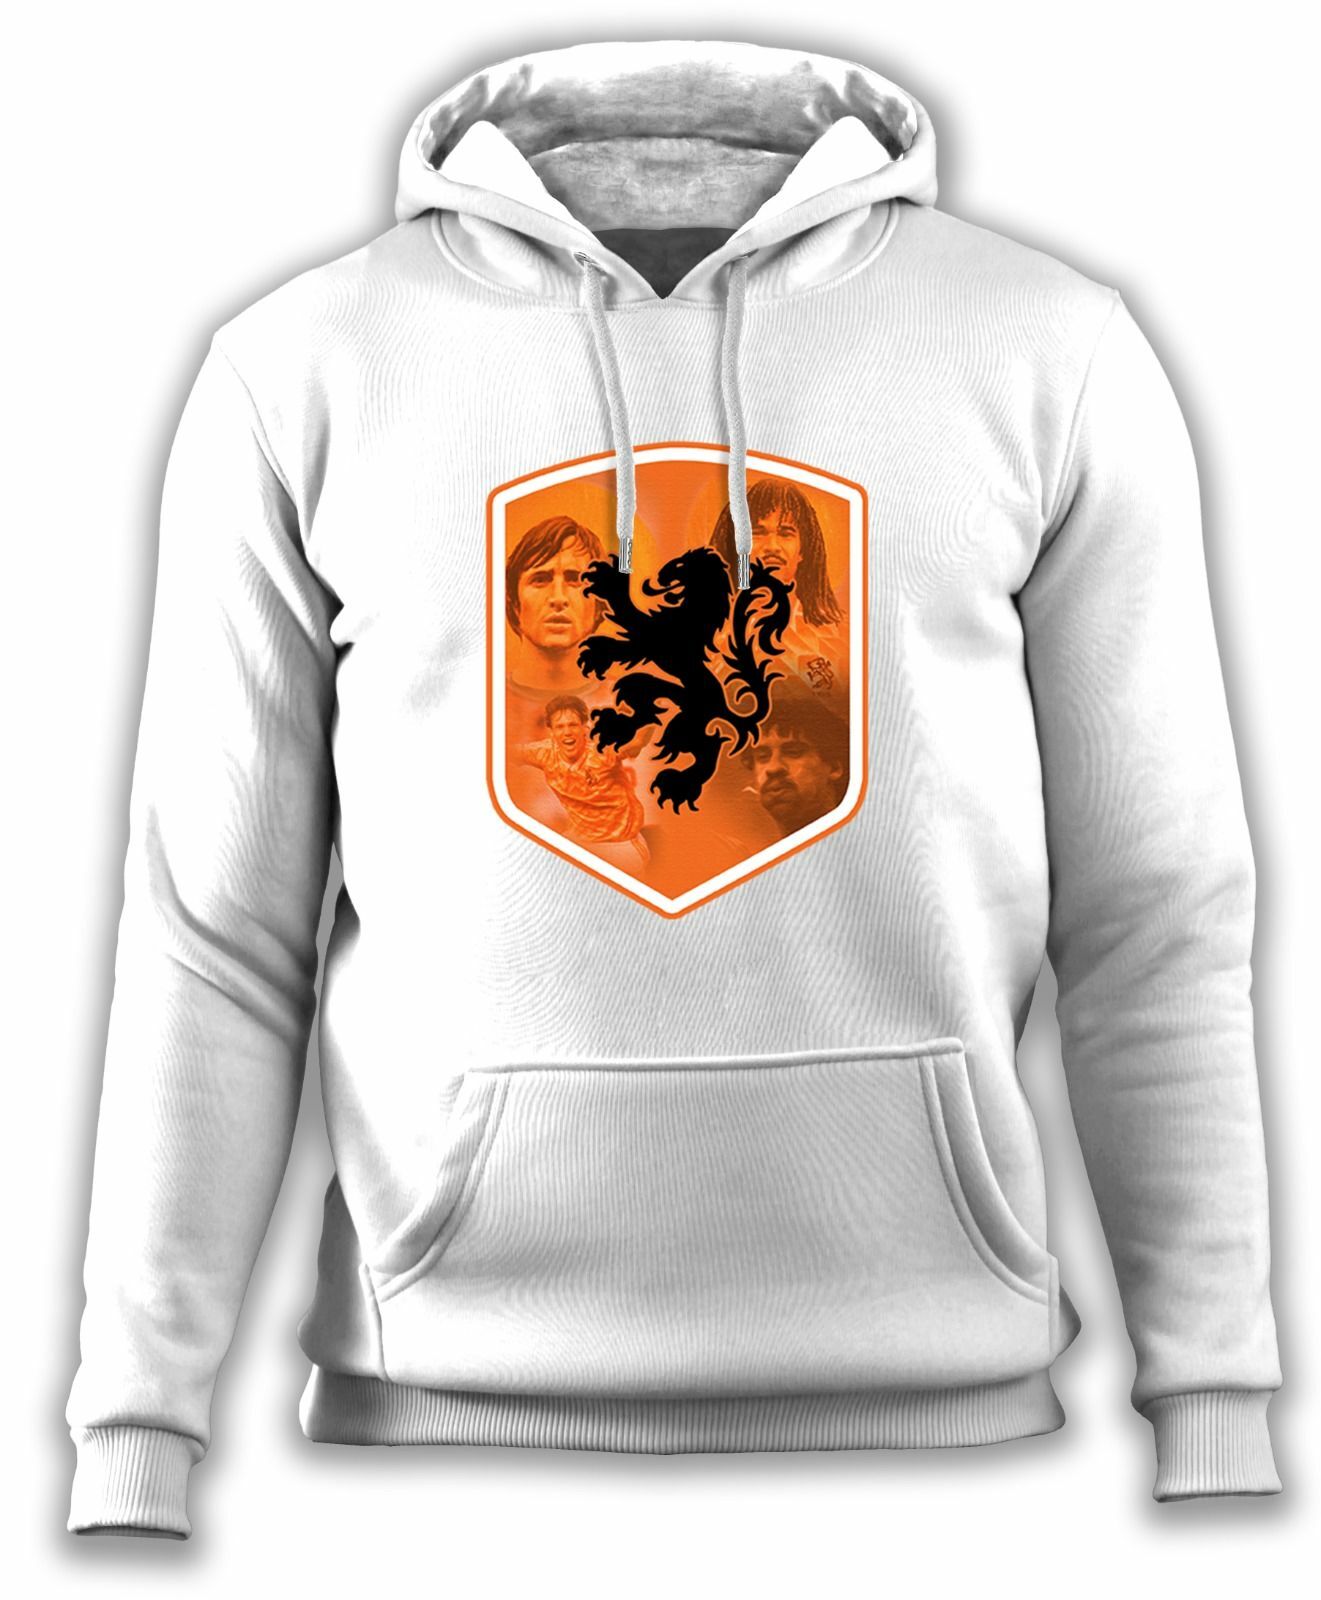 The Netherlands (Hollanda) - Sweatshirt